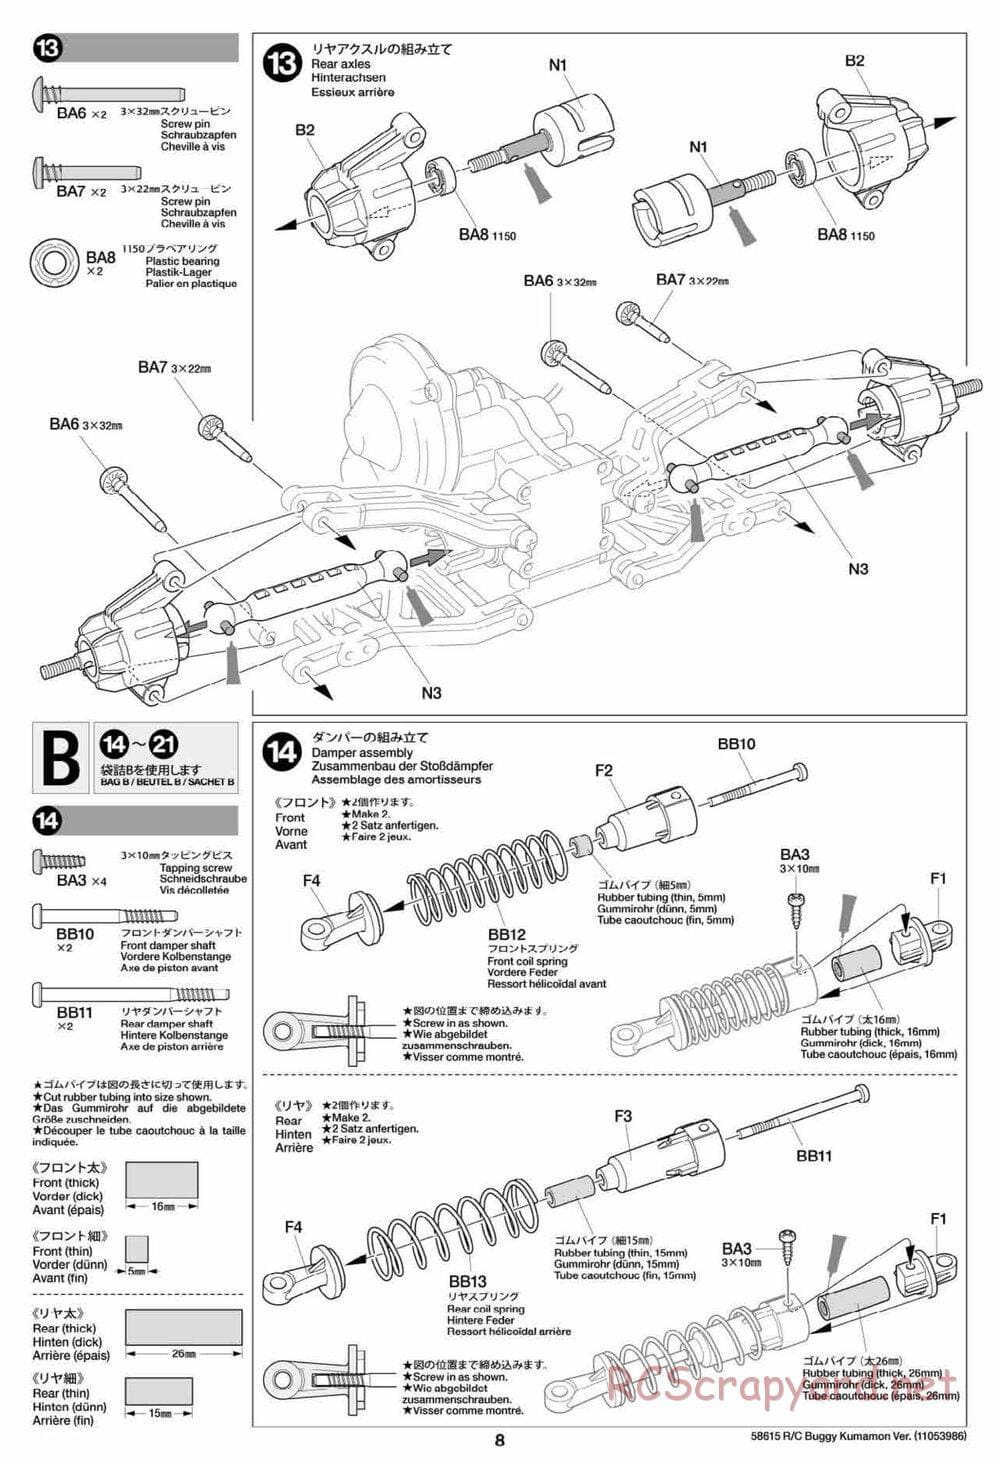 Tamiya - Buggy Kumamon Version Chassis - Manual - Page 8